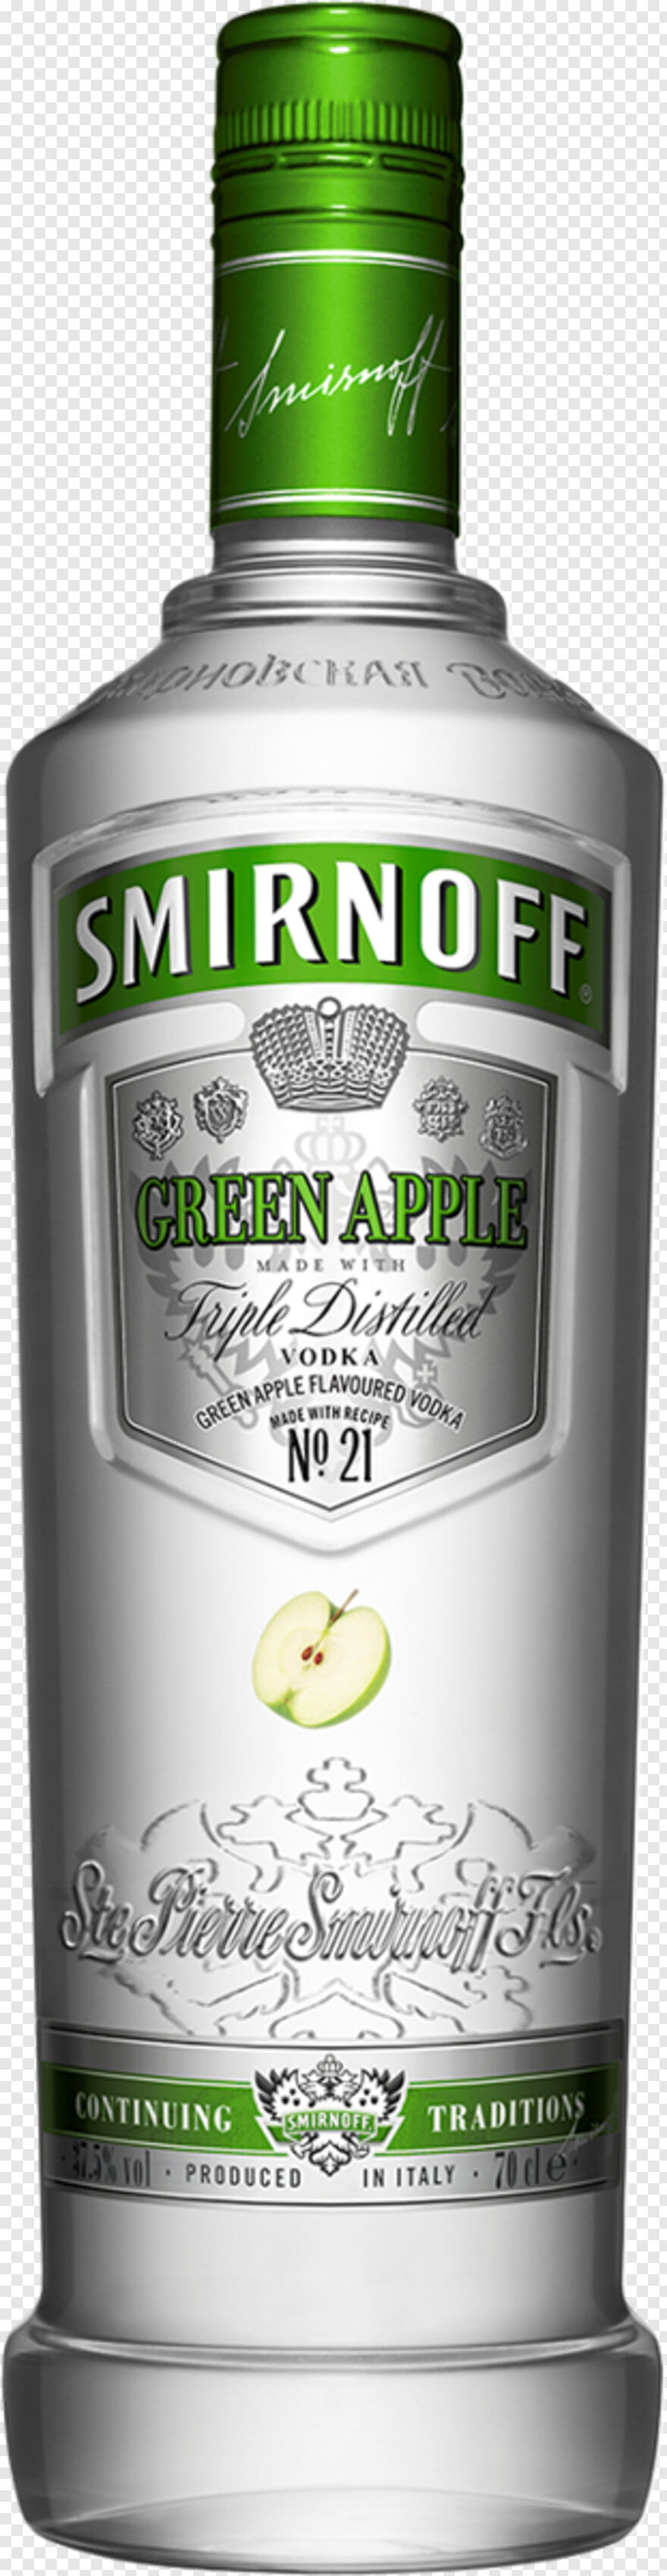 green-apple # 500569